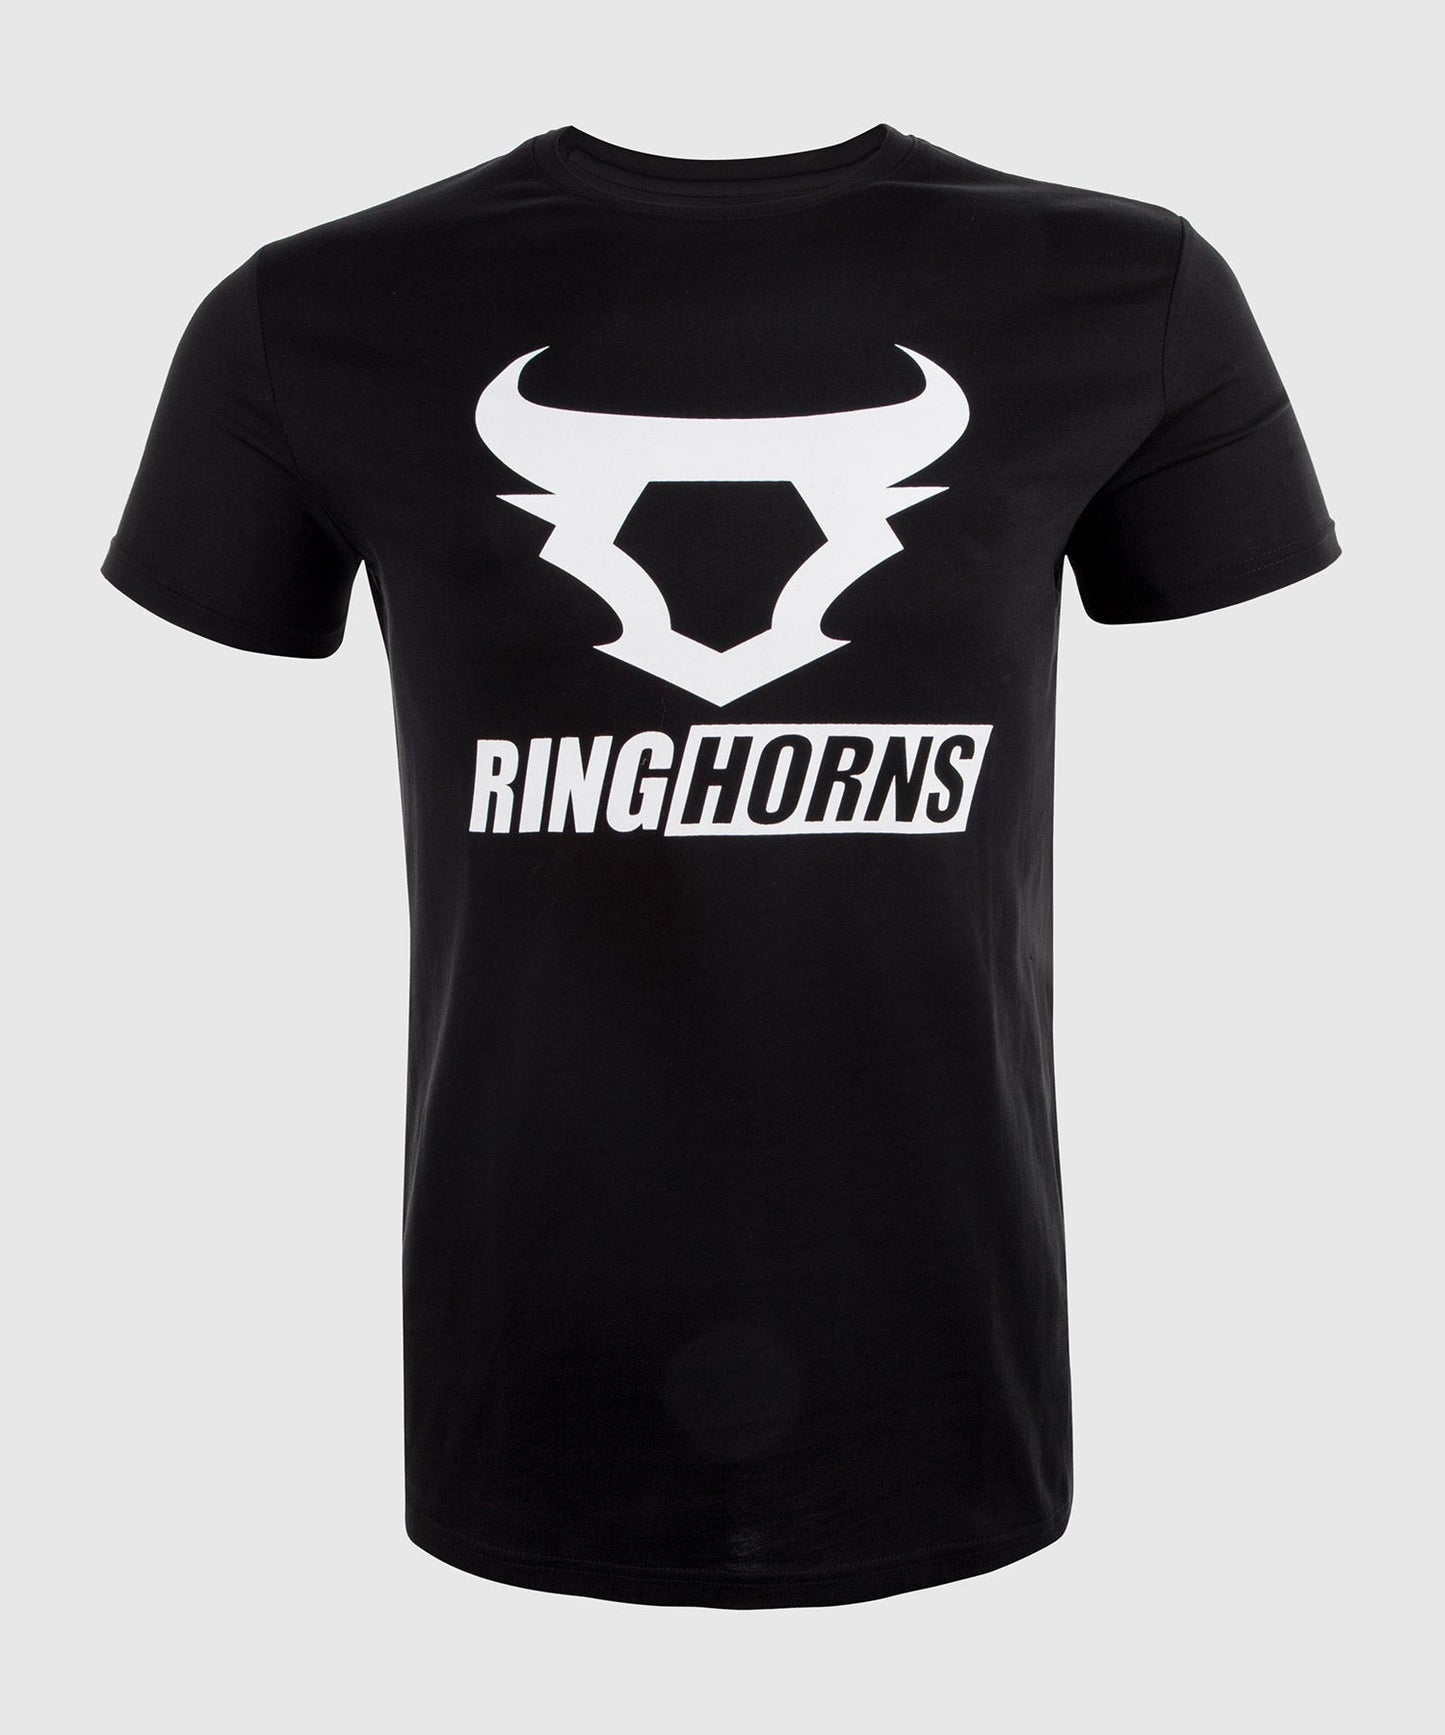 Ringhorns T-shirt Charger - Black